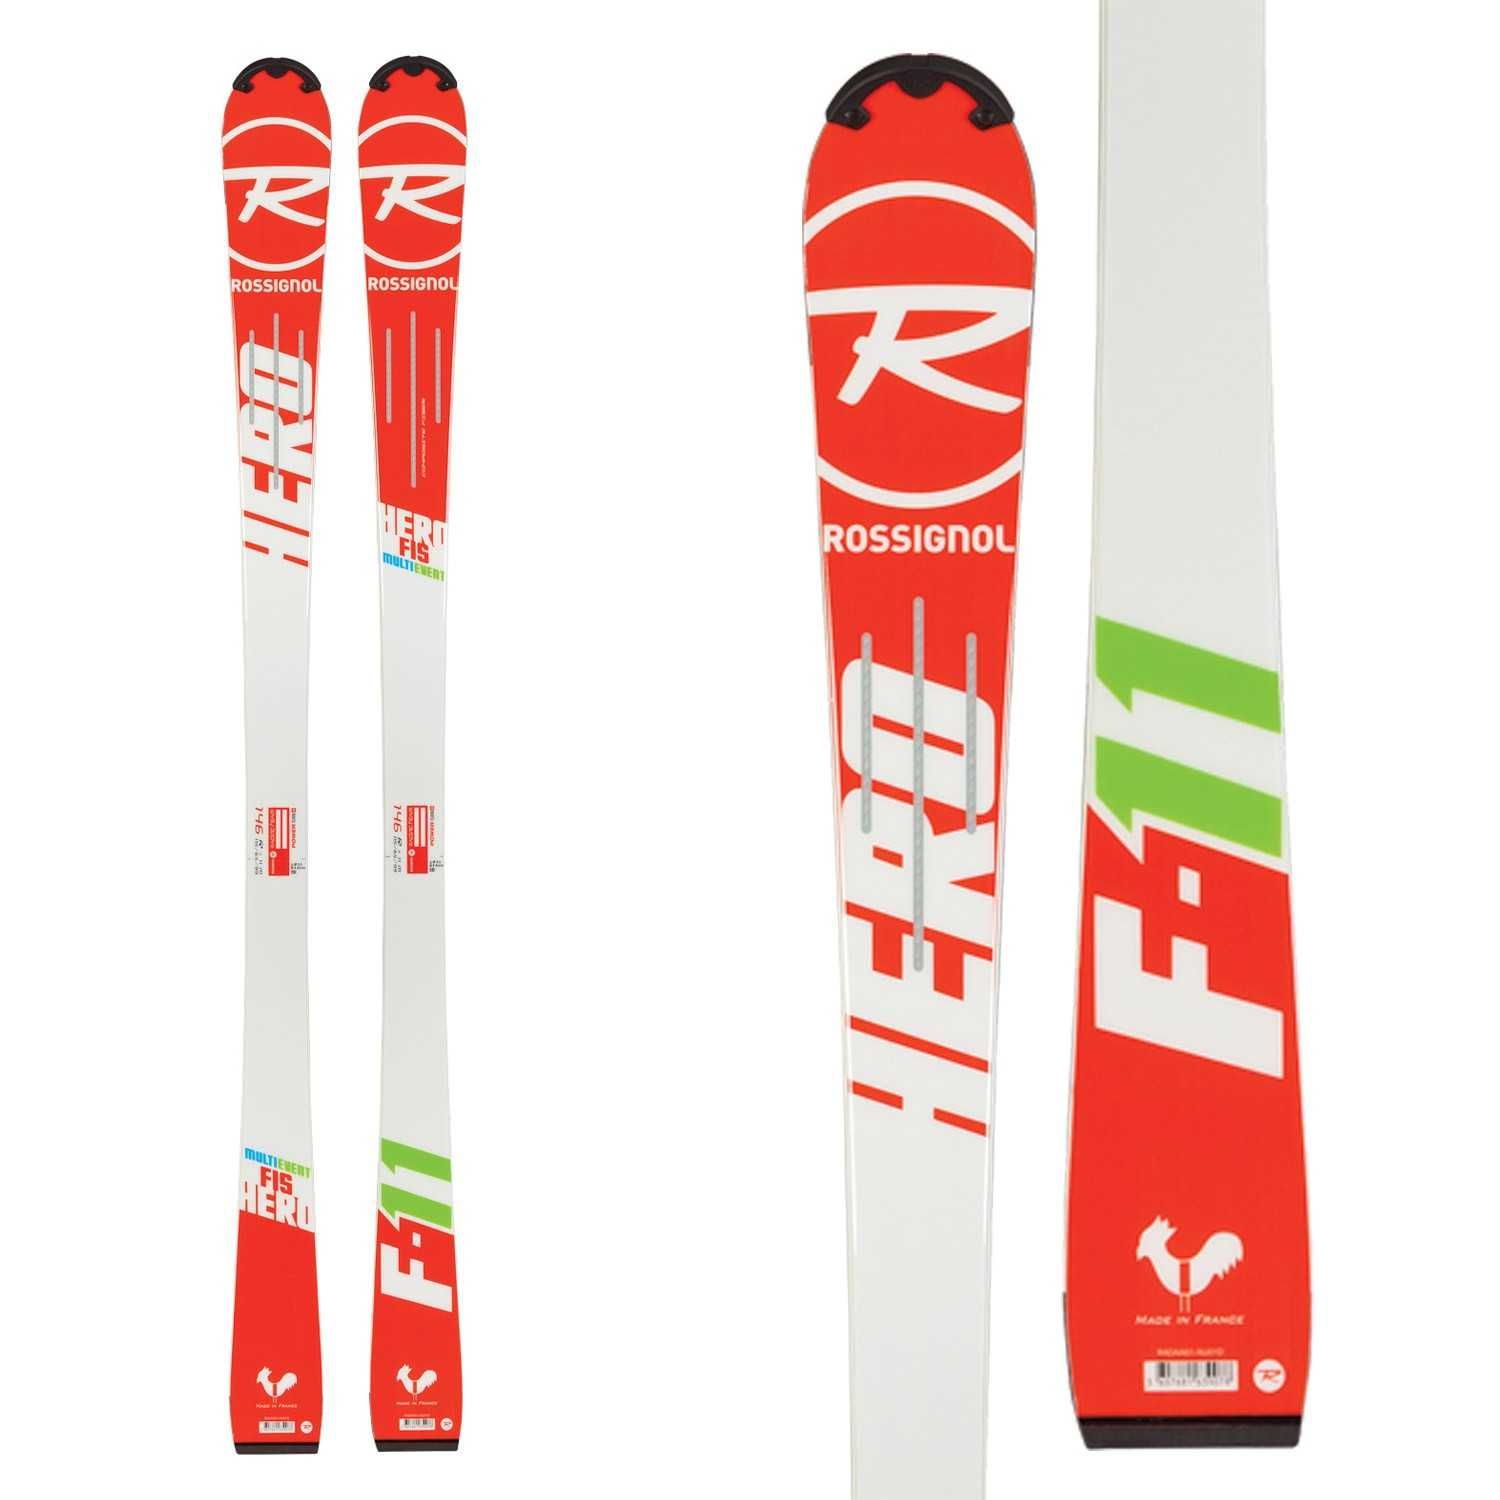 Ski Hero Fise WHITE 125cm